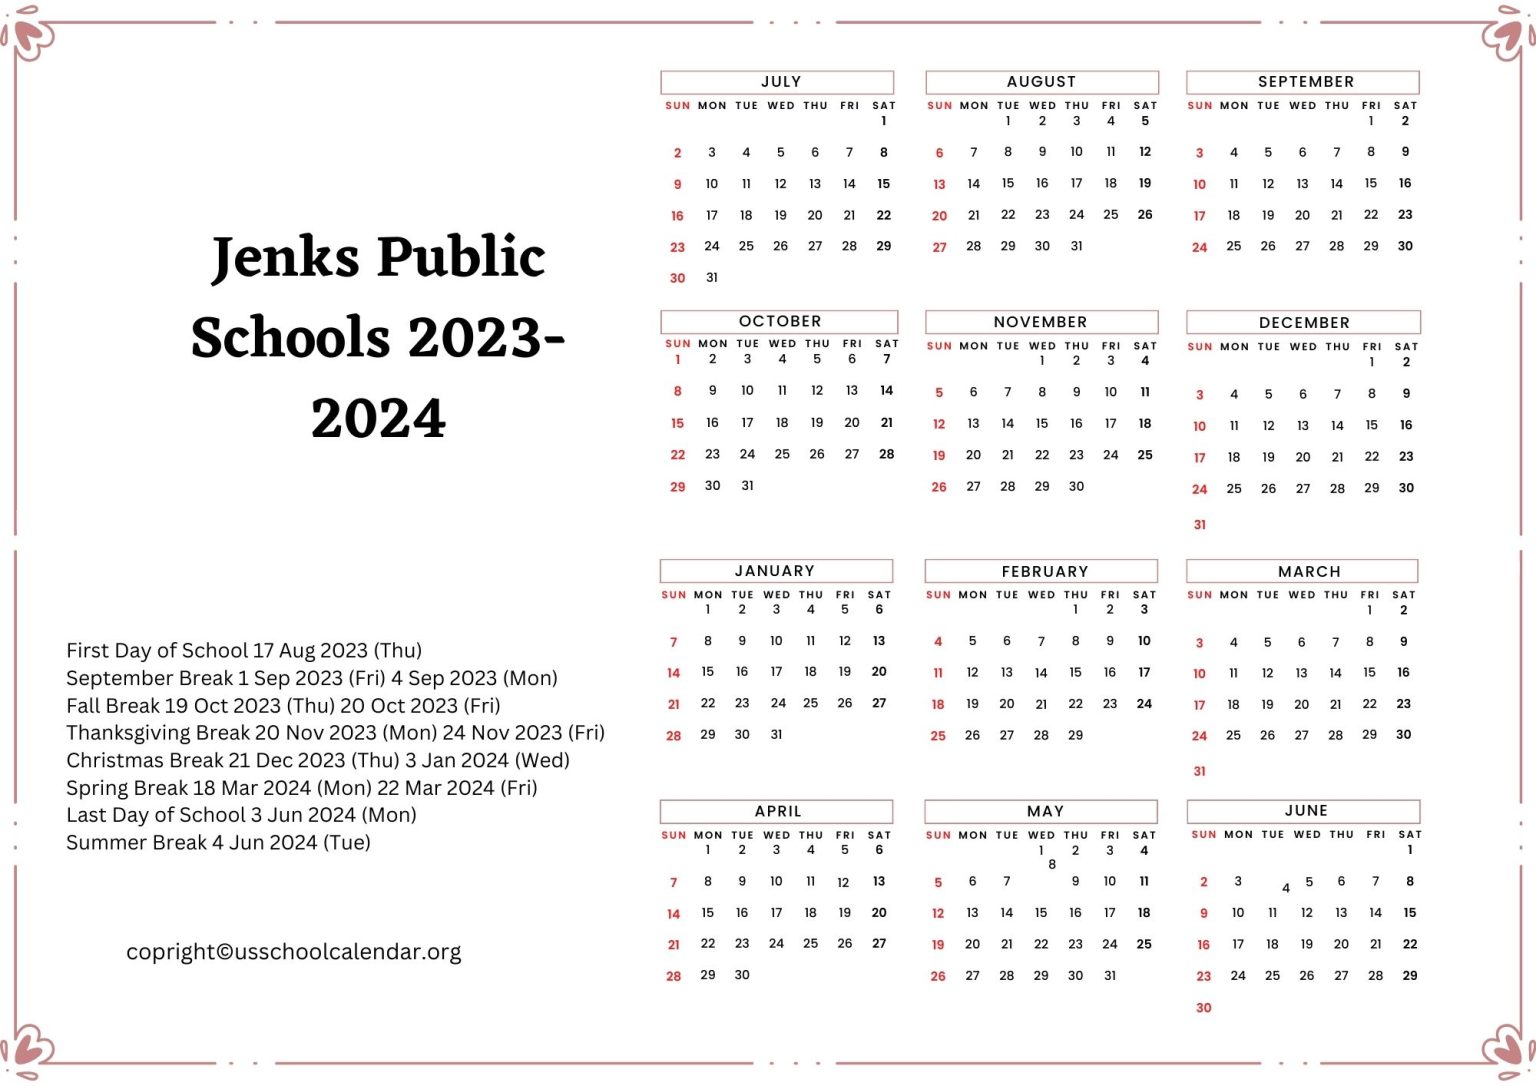 Jenks Public Schools Calendar With Holidays 2023 2024